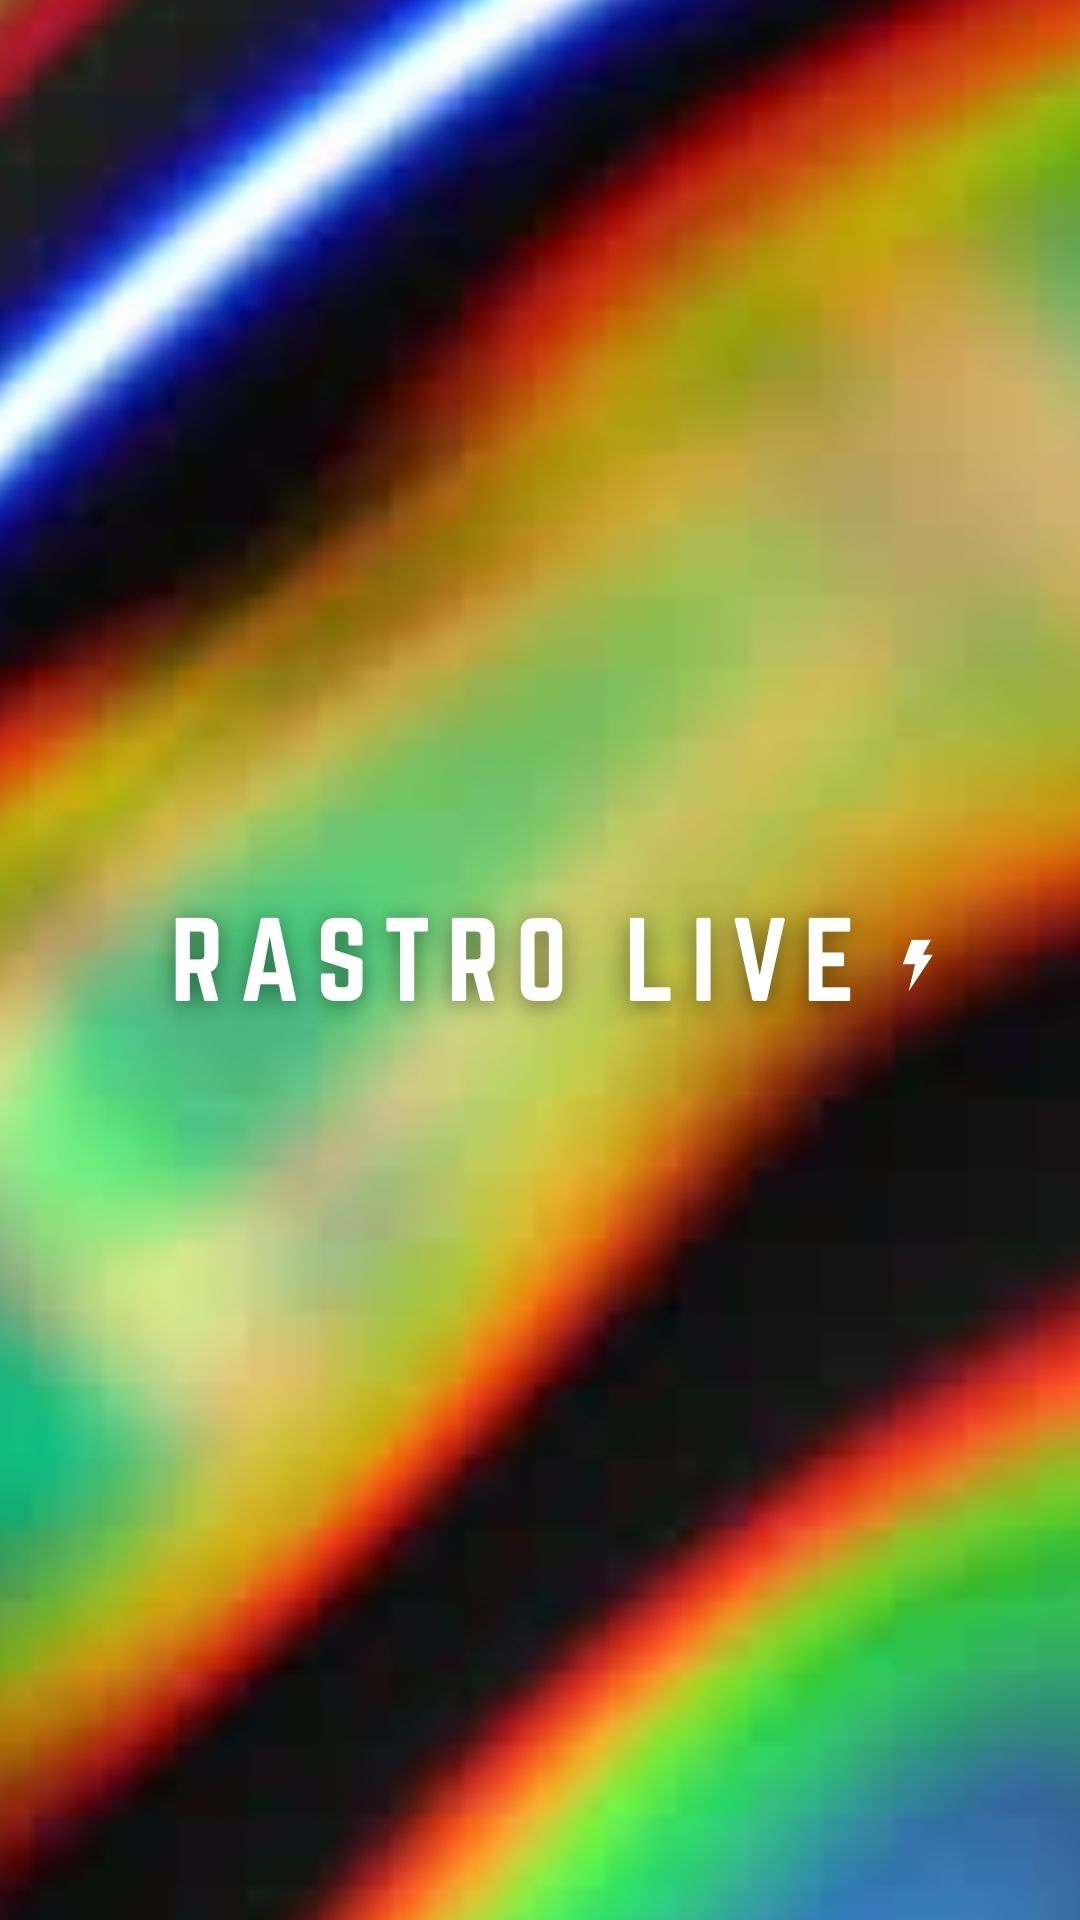 RASTRO LIVE (Midtrax Sound System aka Marcos in Dub, Espiritusanto) - Flyer front